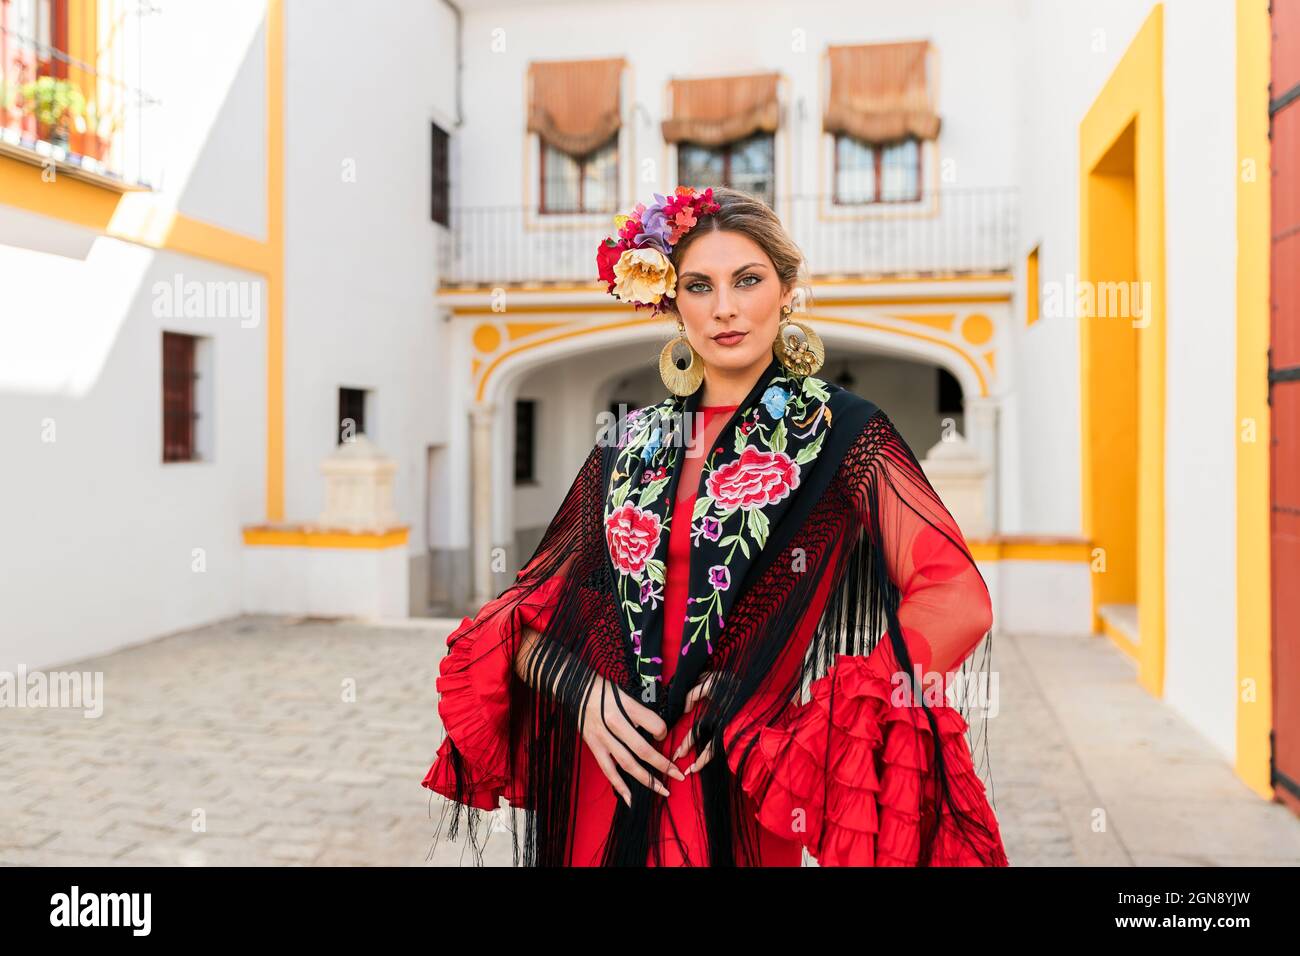 Woman in traditional dress standing at Plaza de toros de la Real Maestranza de Caballeria de Sevilla, Spain Stock Photo